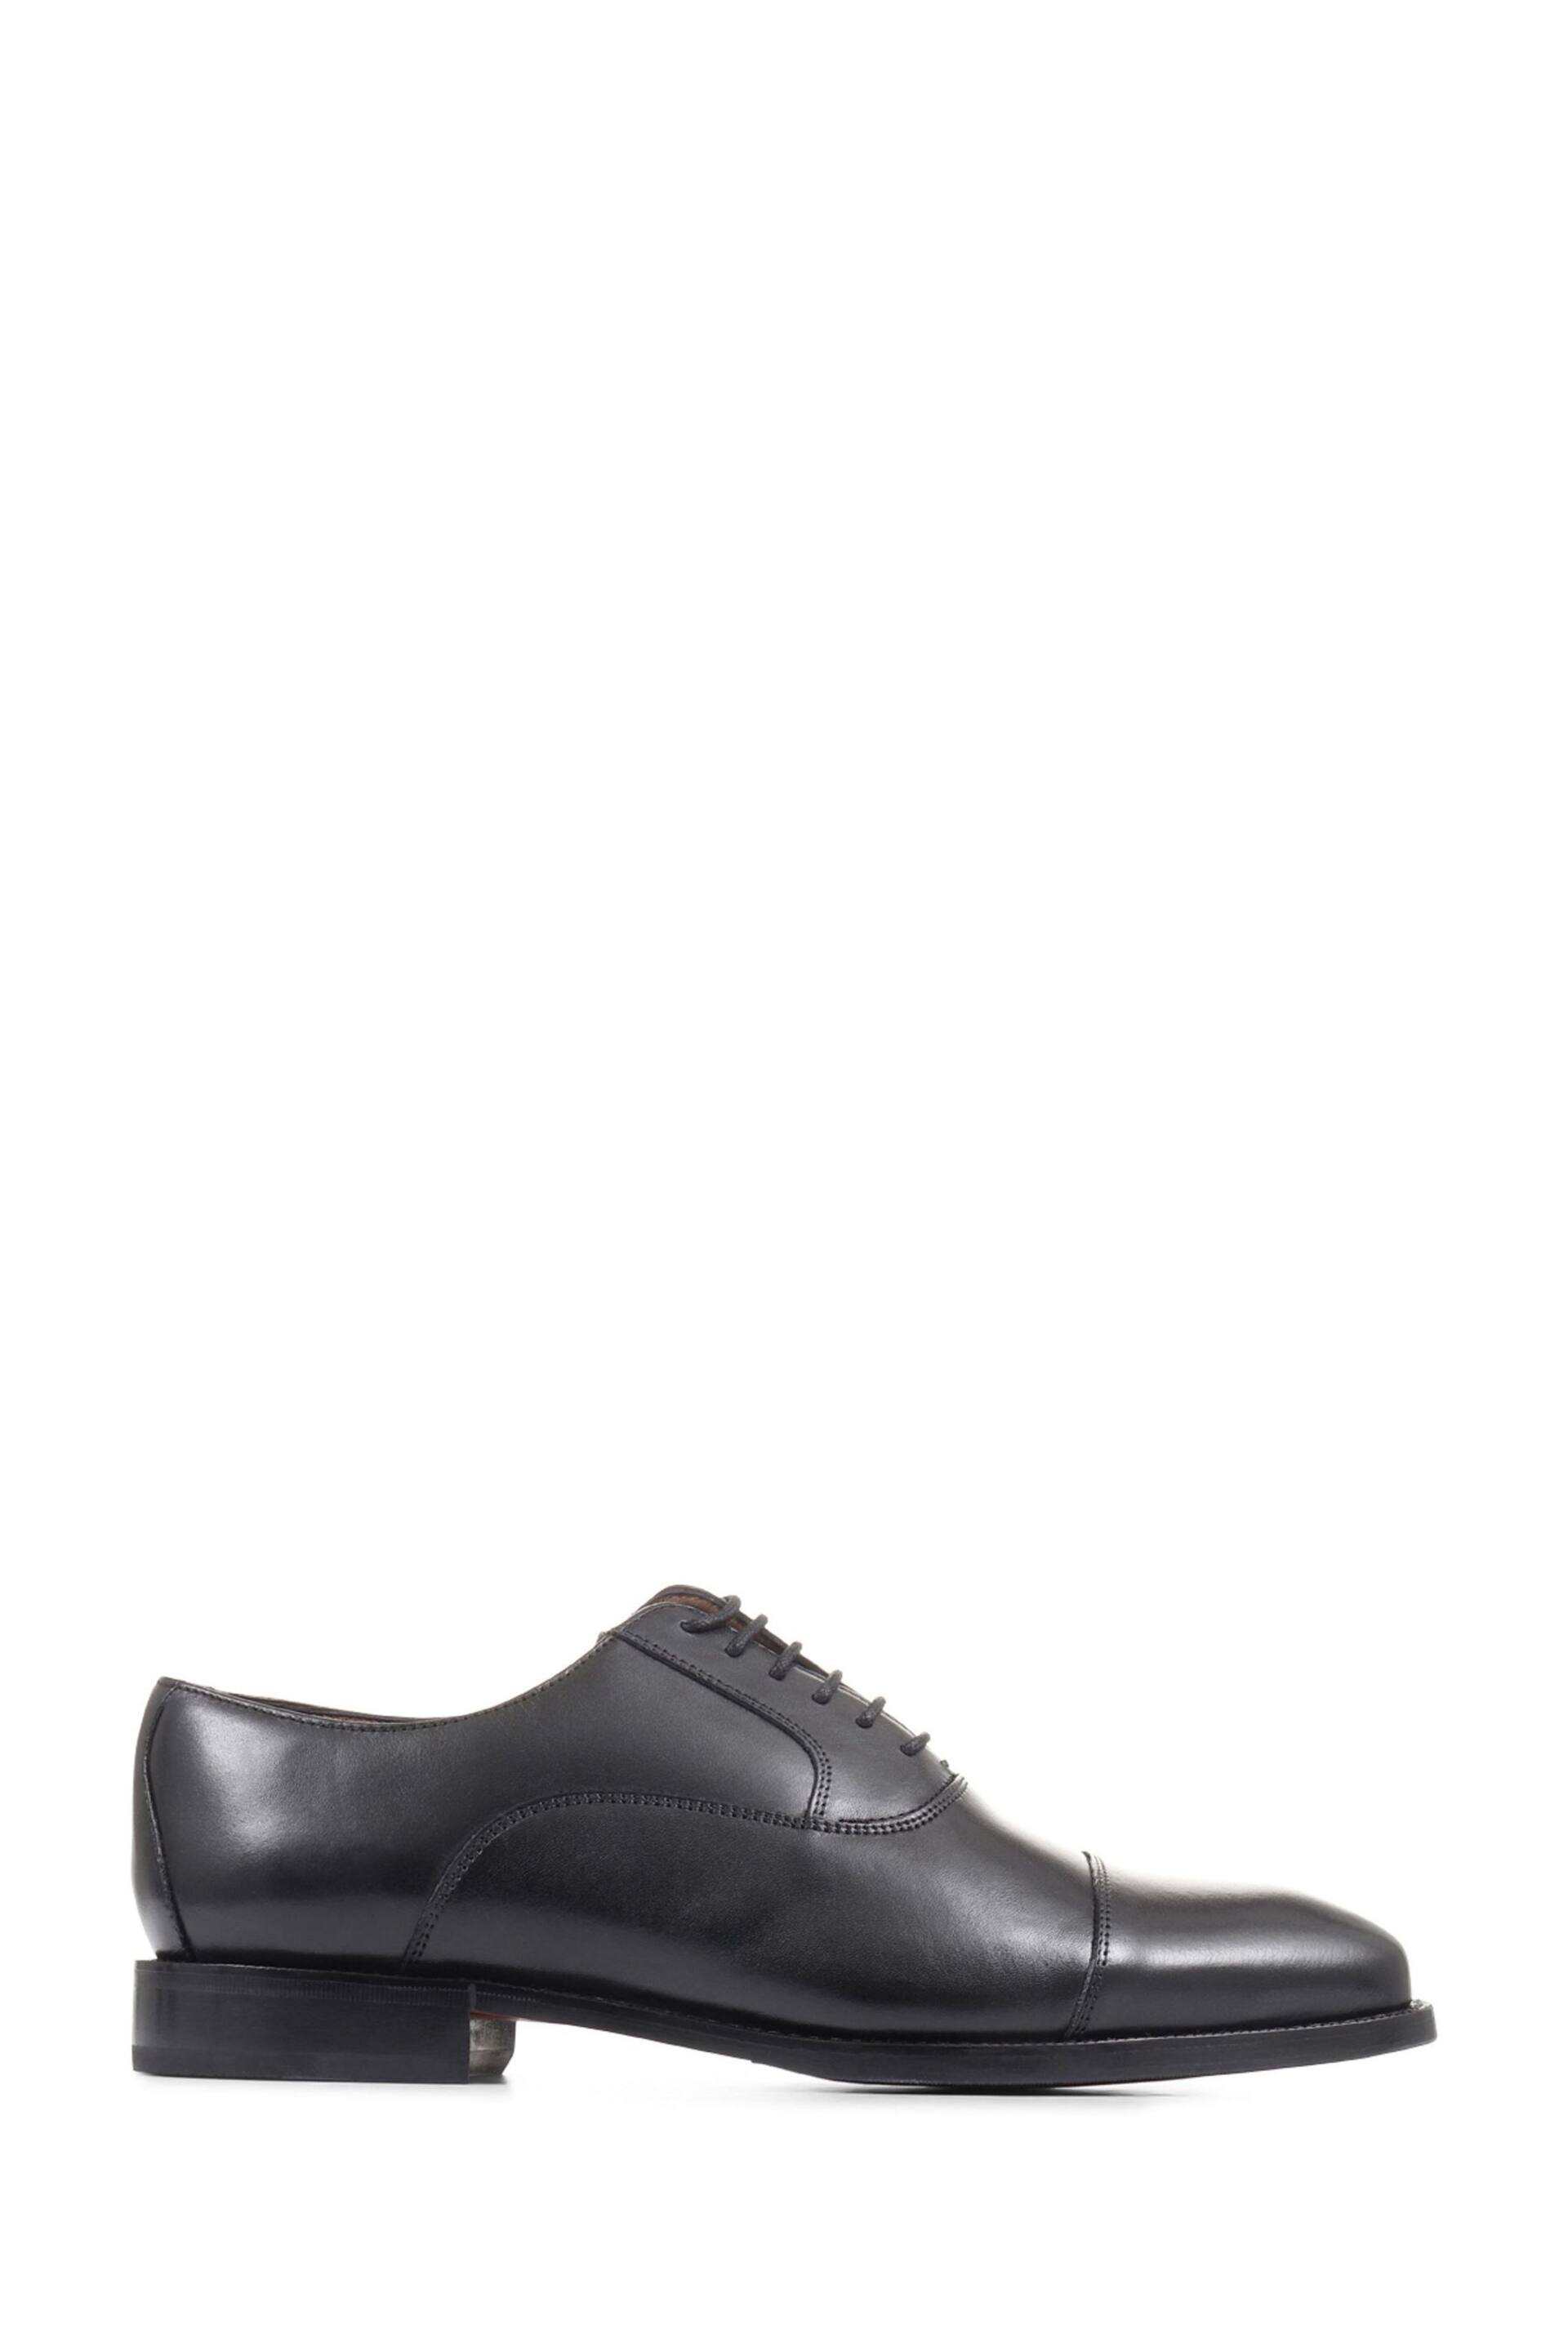 Jones Bootmaker Matthew Black Wide Fit Oxford Shoes - Image 1 of 5